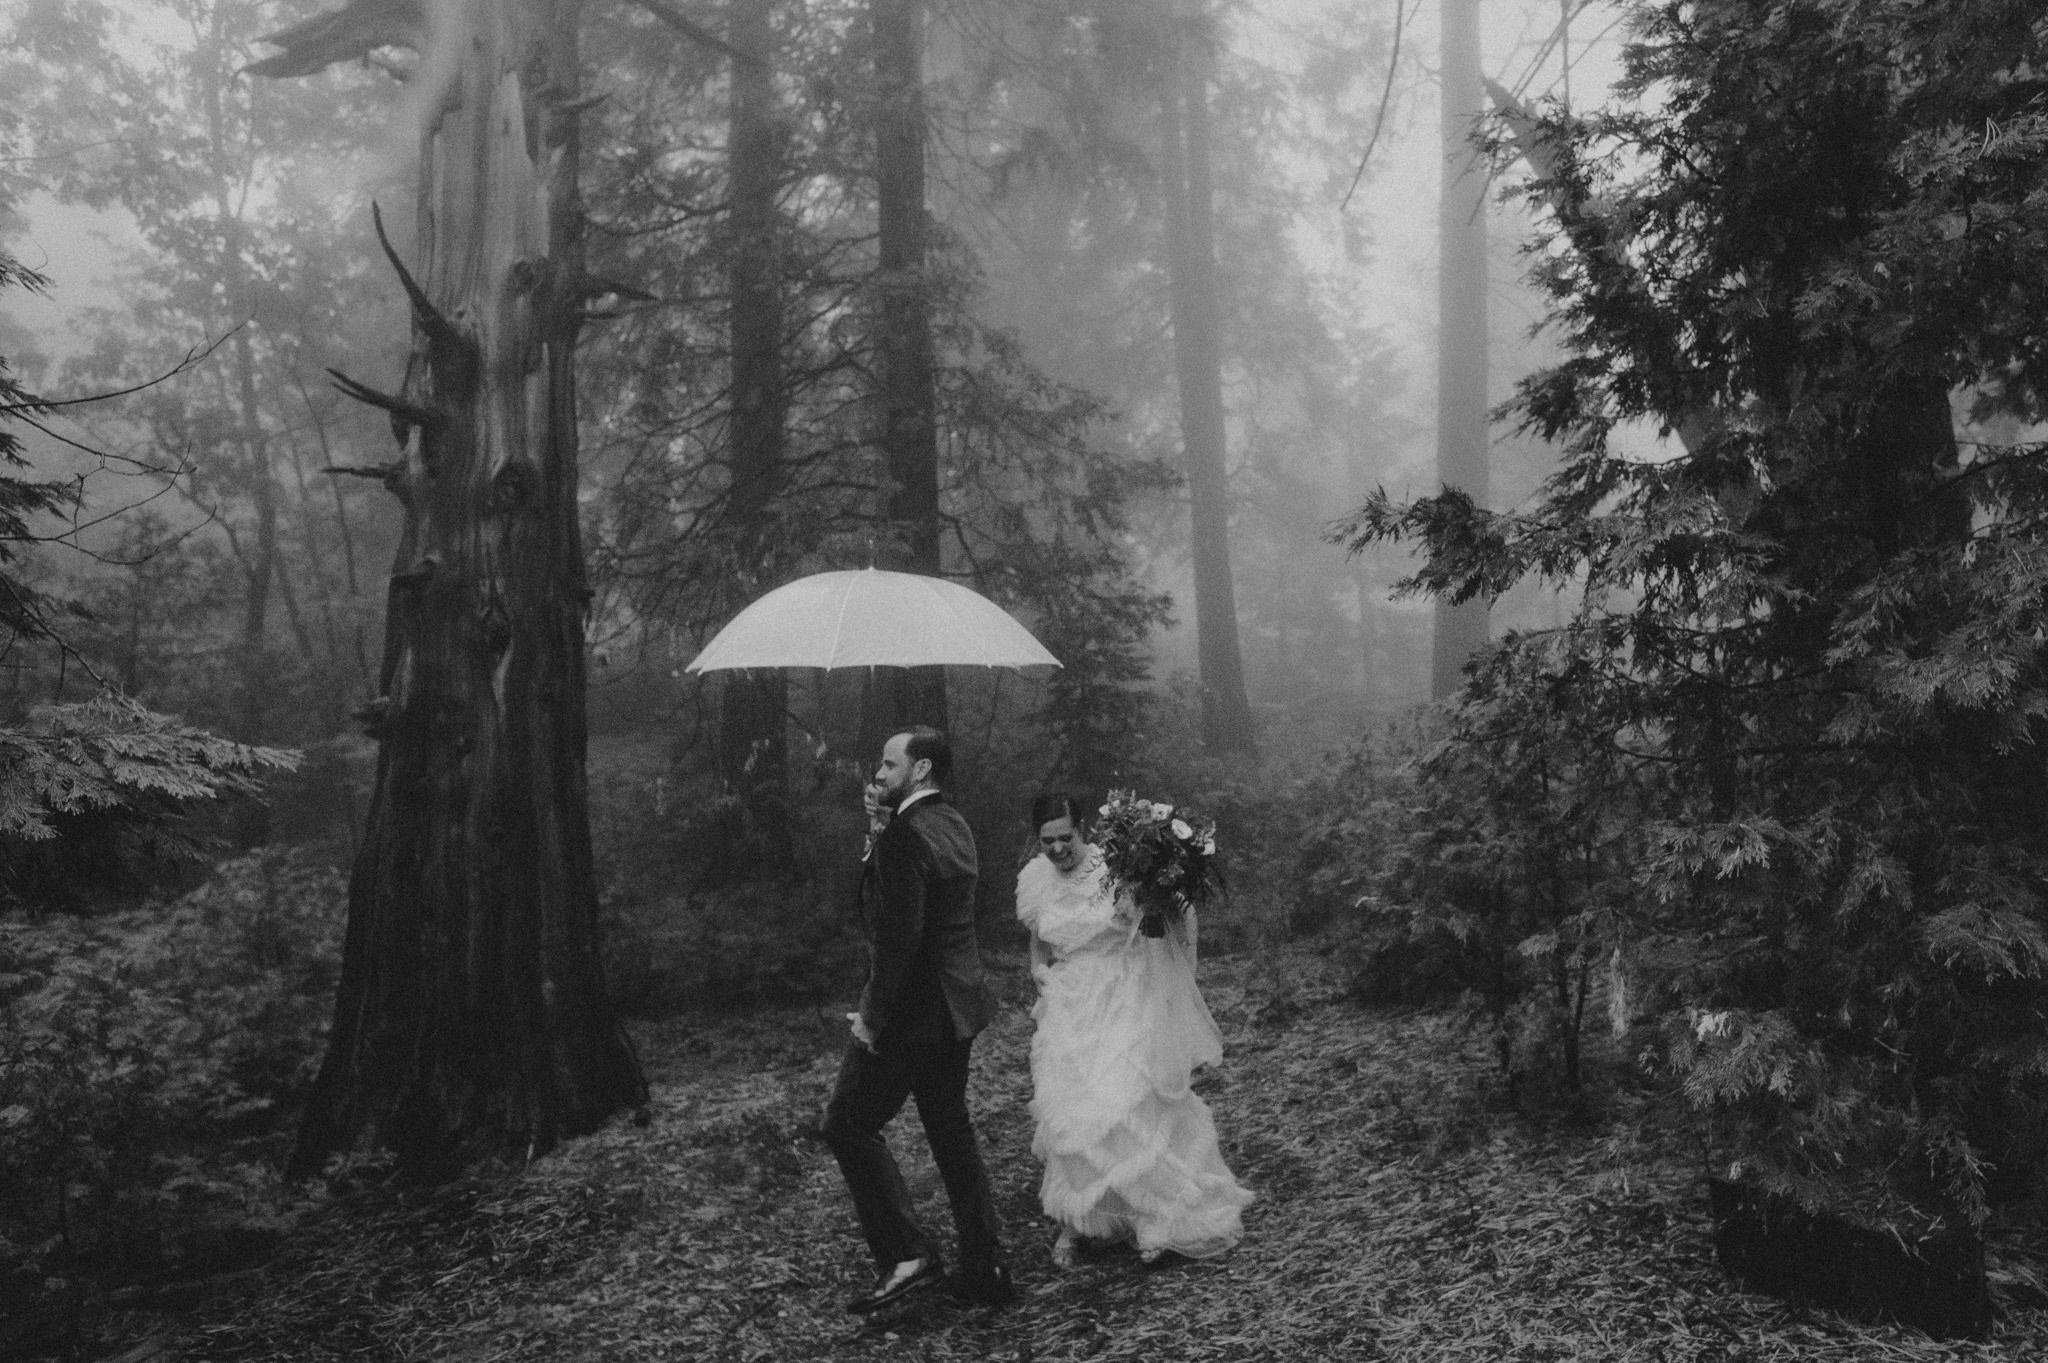 pine rose cabins lake arrowhead wedding - queer wedding photographers - itlaphoto.com-77.jpg